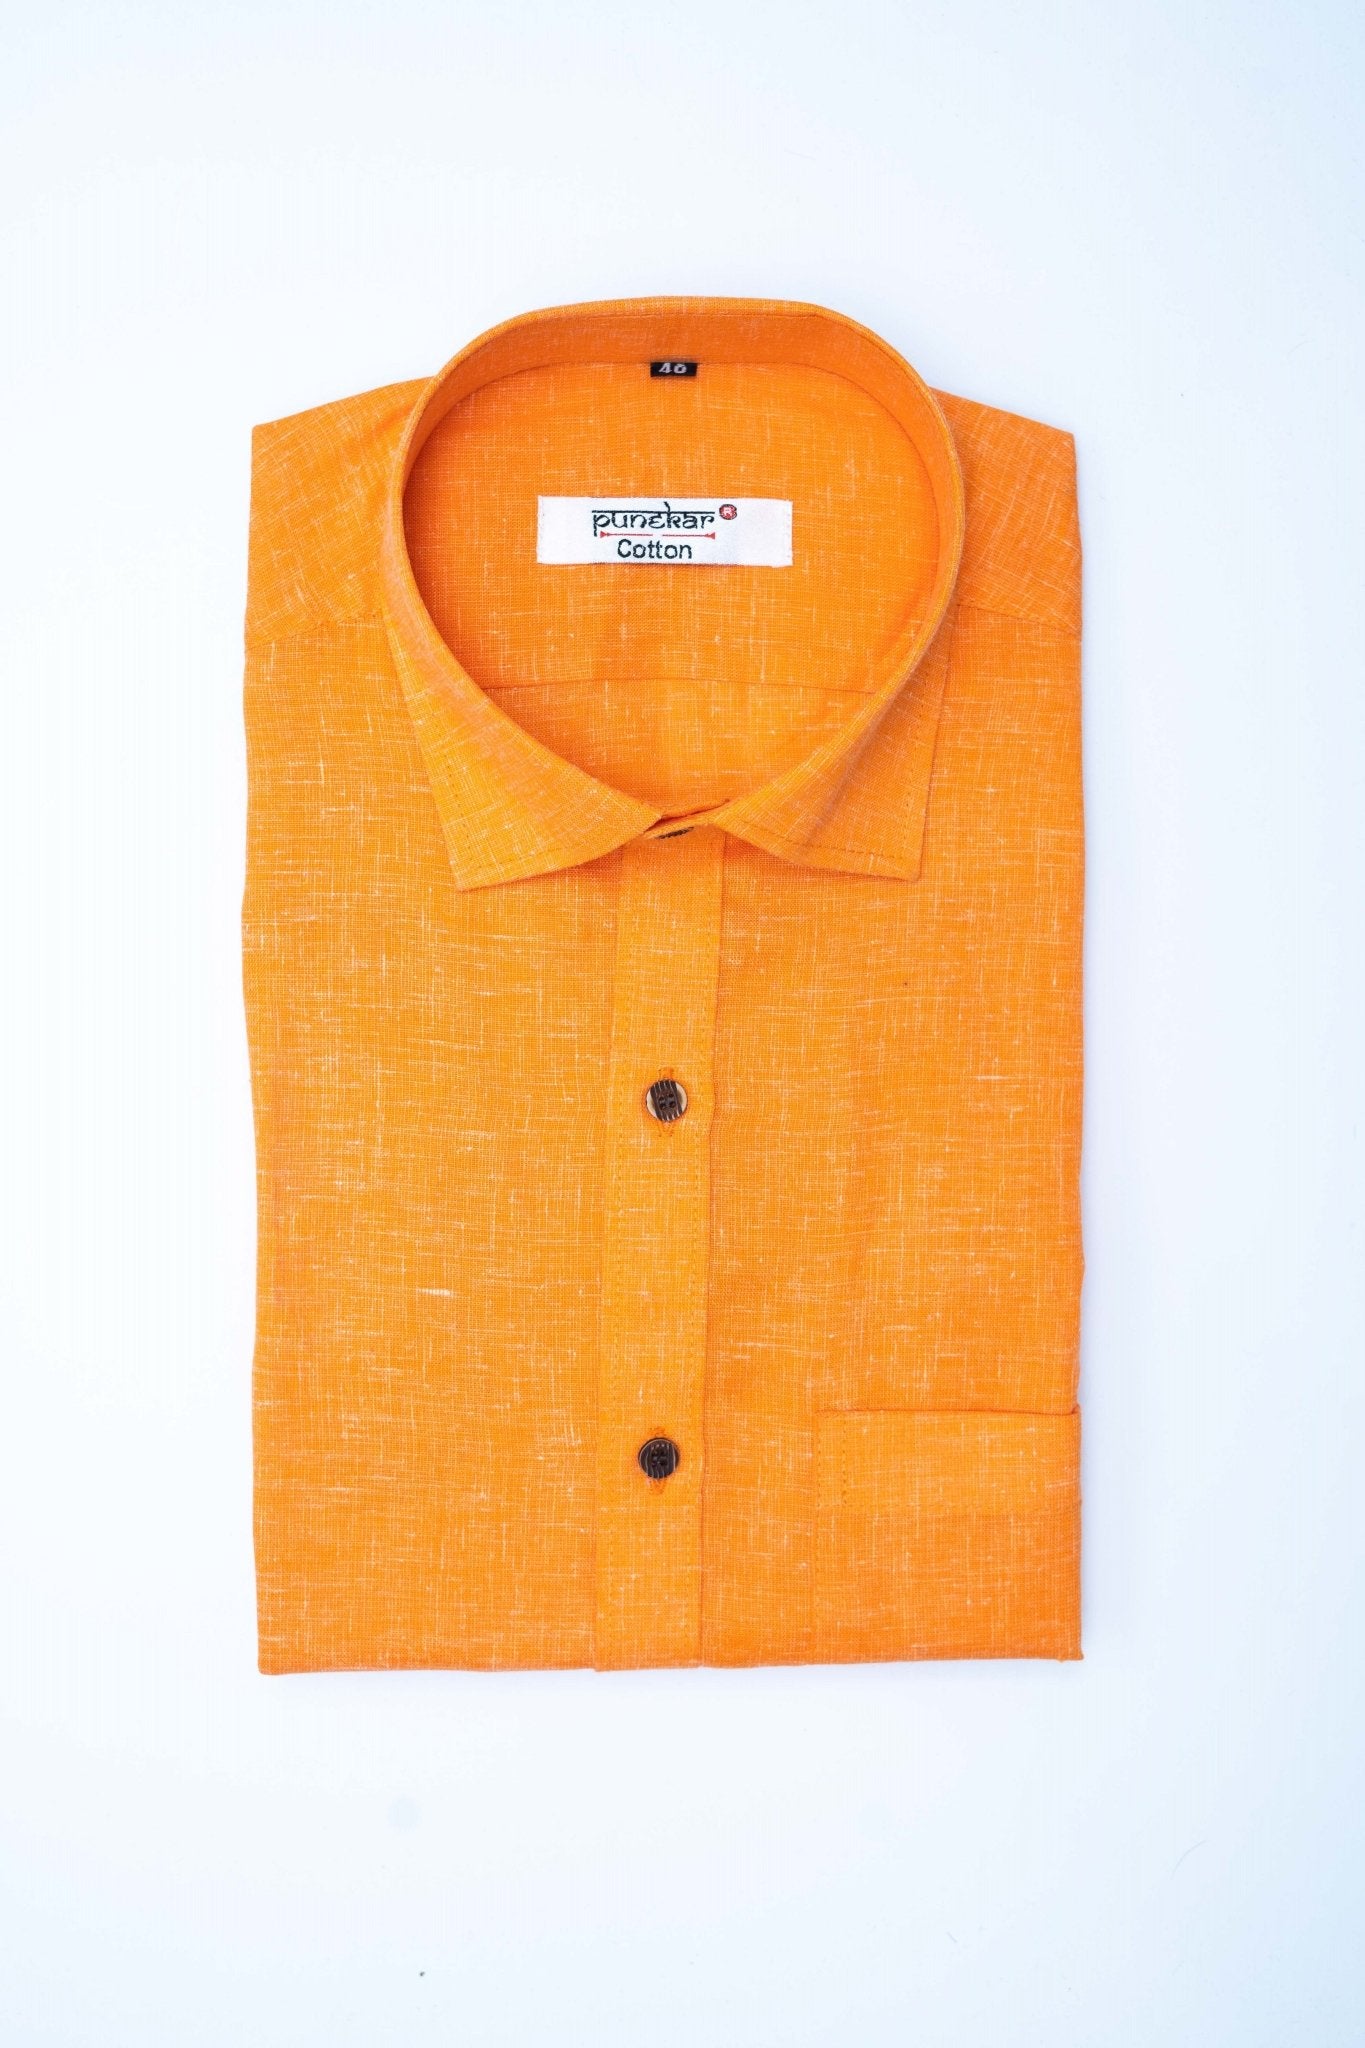 Punekar Cotton Men's Formal Handmade Orange Color Shirt for Men's.